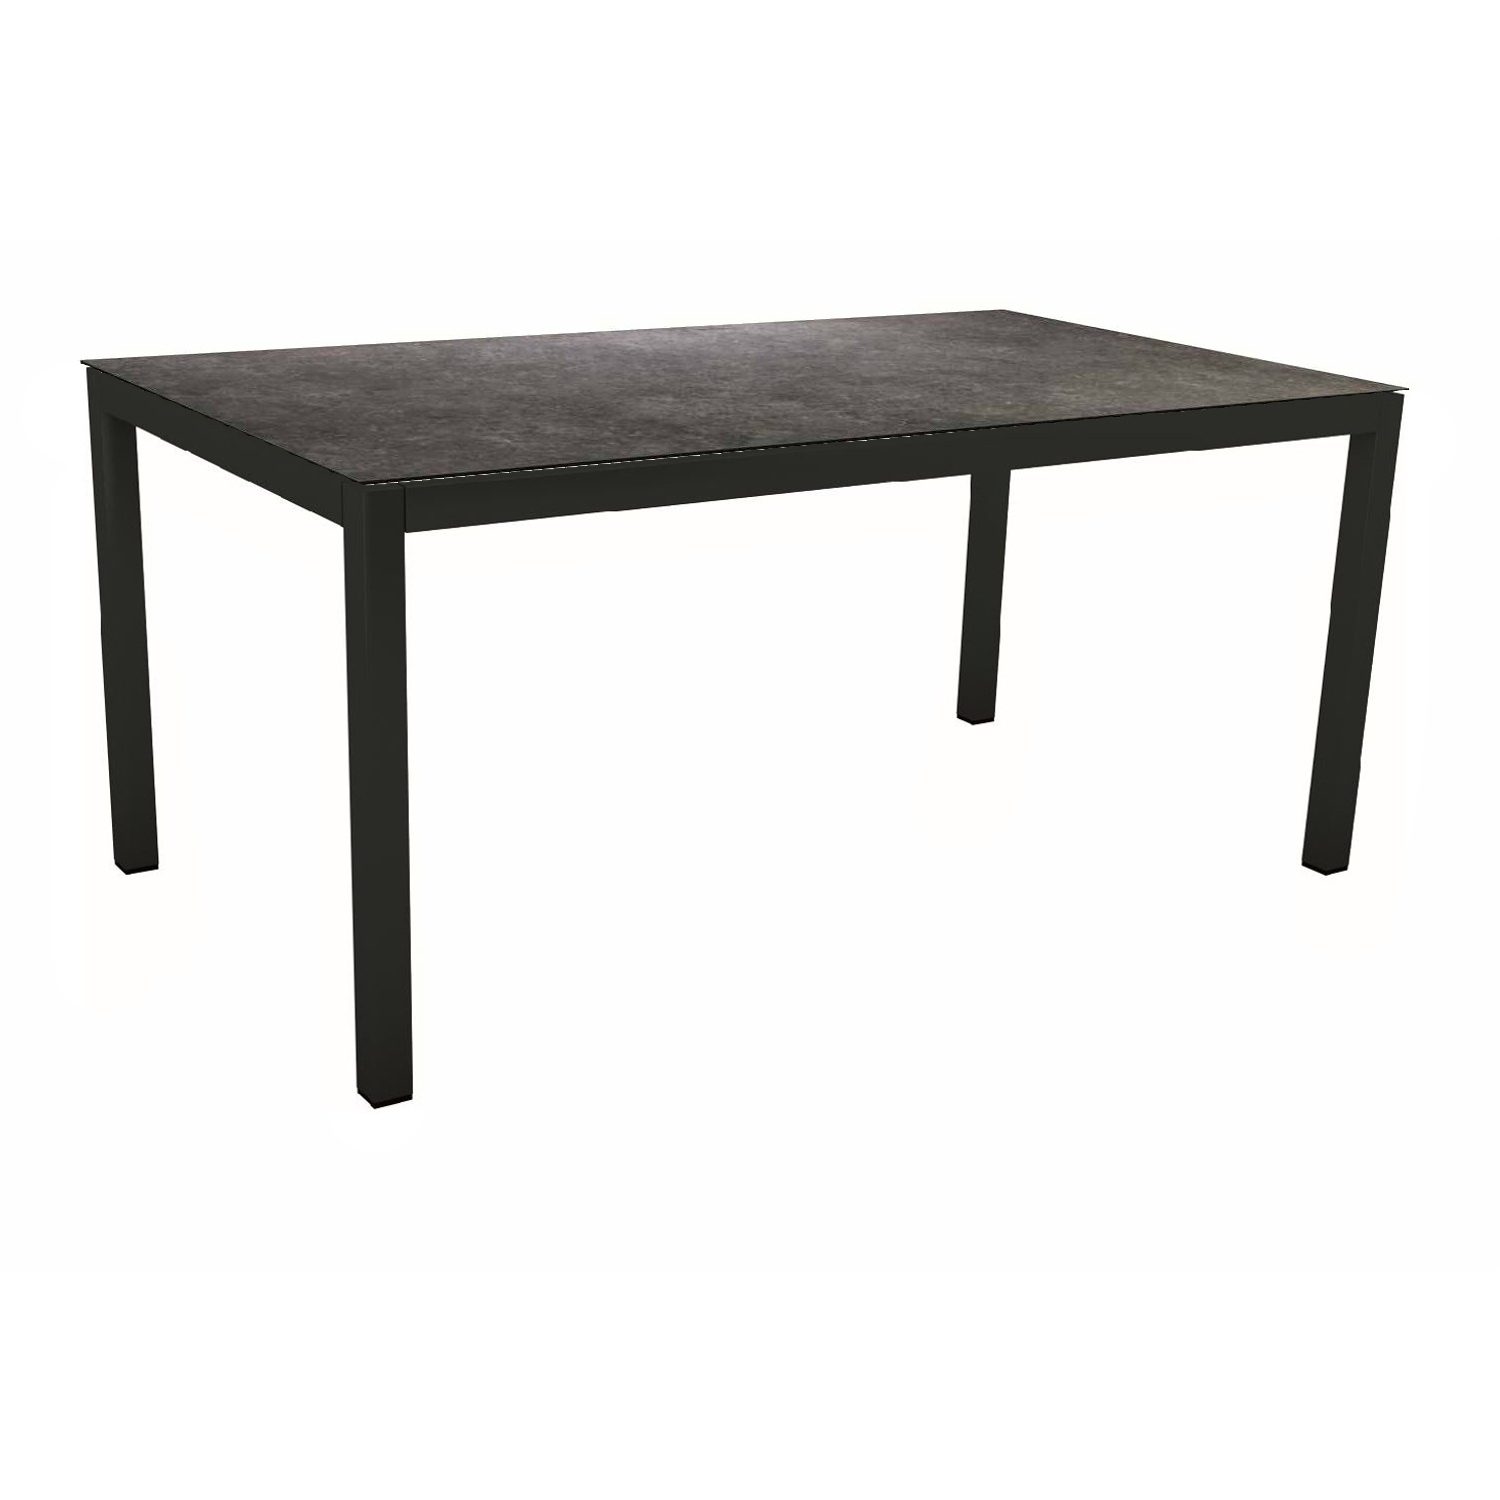 Stern Gartentisch, Gestell Aluminium schwarz matt, Tischplatte HPL Vintage Grau, 160x90 cm